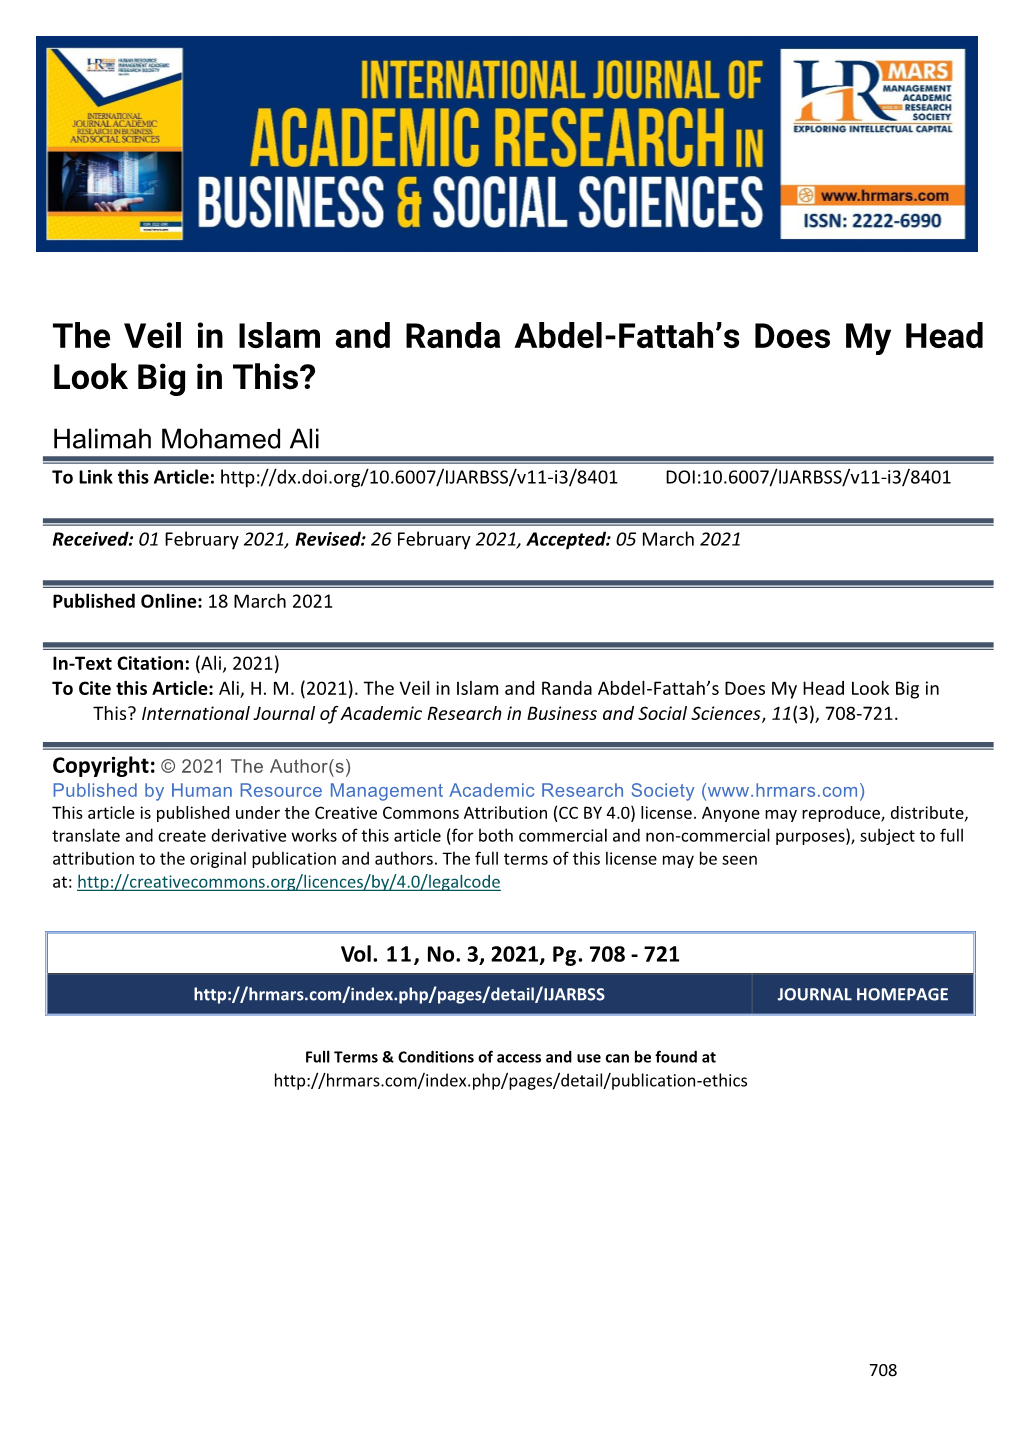 The Veil in Islam and Randa Abdel-Fattah's Does My Head Look